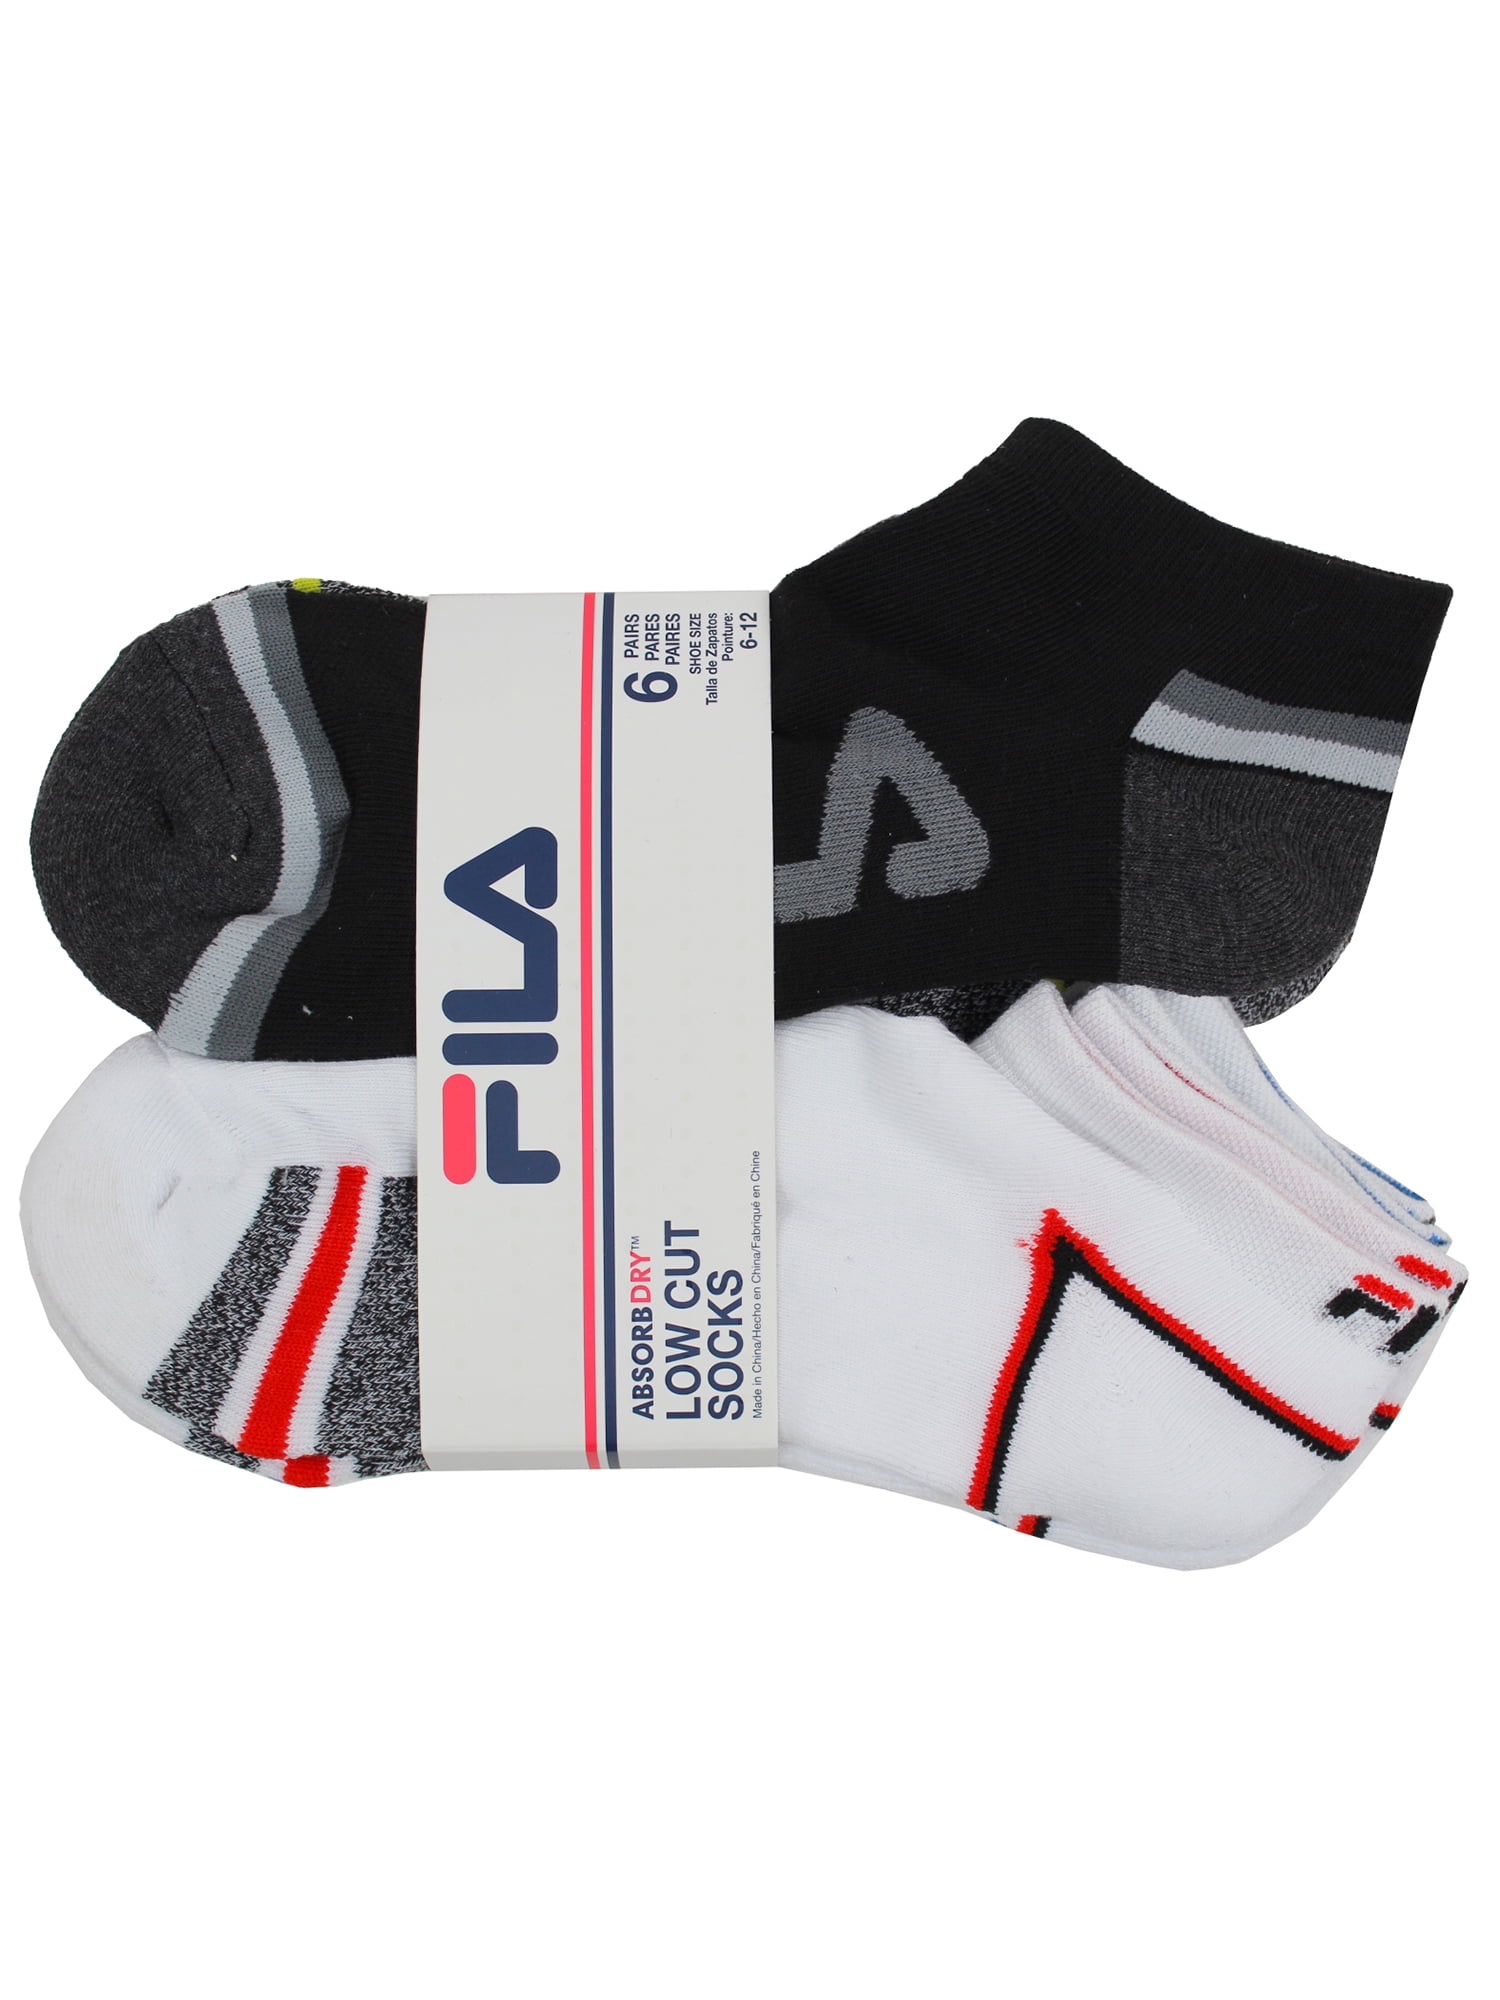 Fila Mens 6 Pack Low-Cut Athletic Sport Socks Shoe Size 6-12 Assorted ...